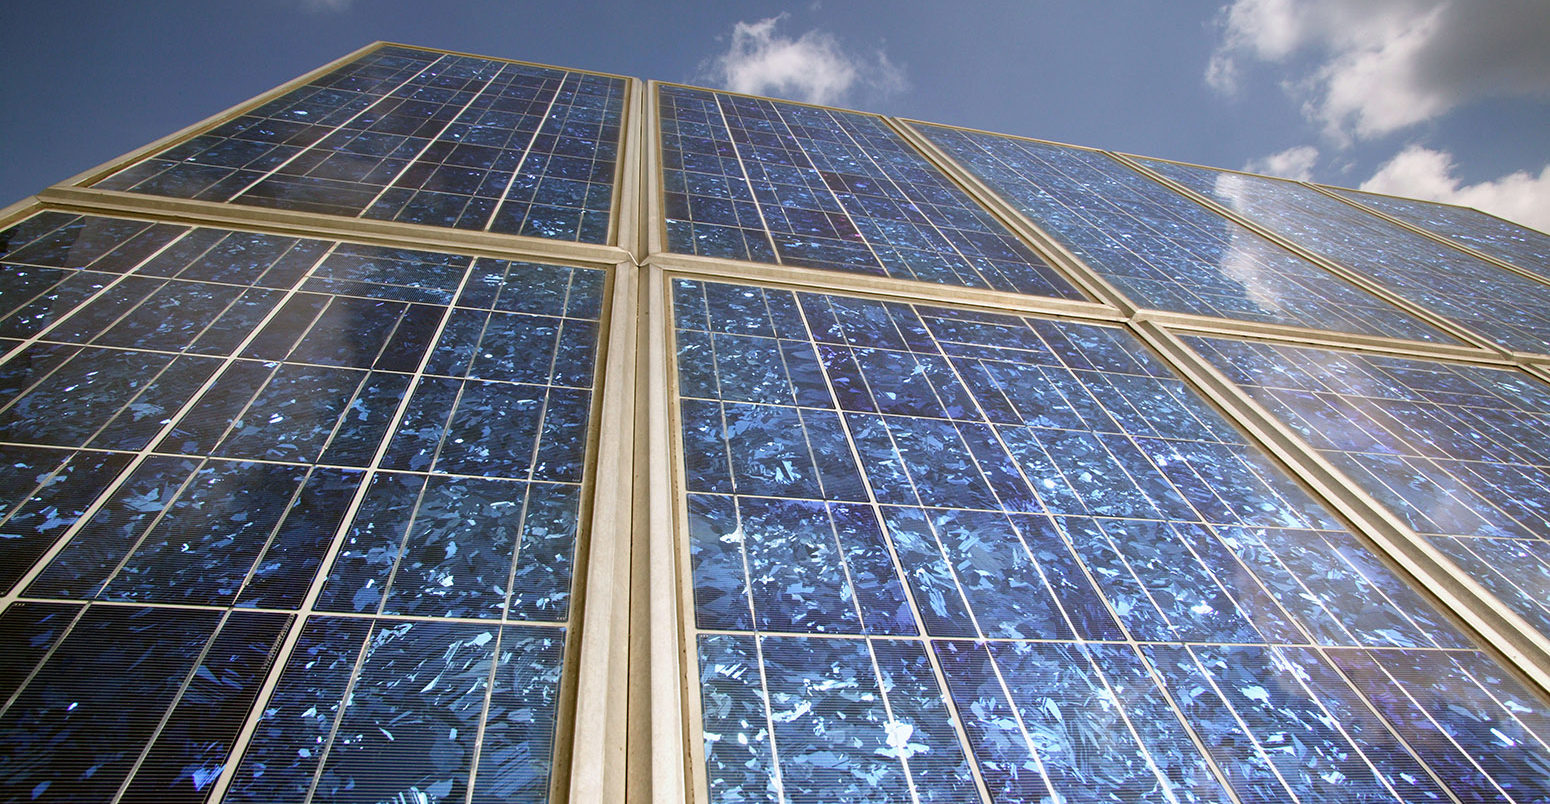 Multi Crystalline solar cells, Shell Solar, Germany. Credit: Friedrich Stark / Alamy Stock Photo A3FNKY